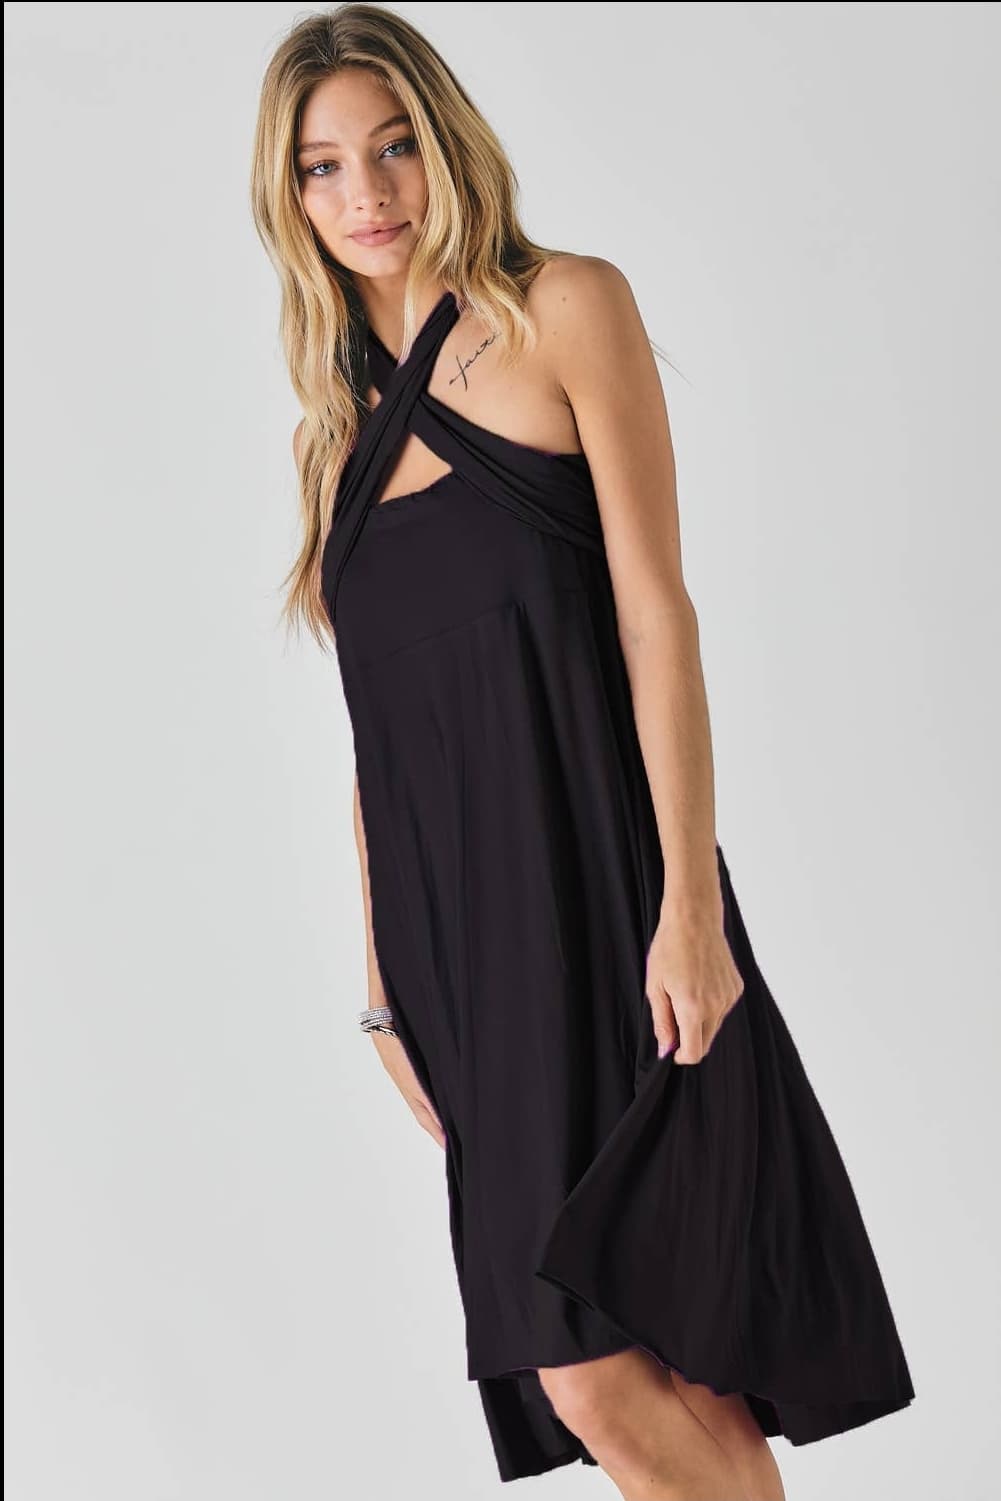 Convertible Midi Skirt or Dress in Black